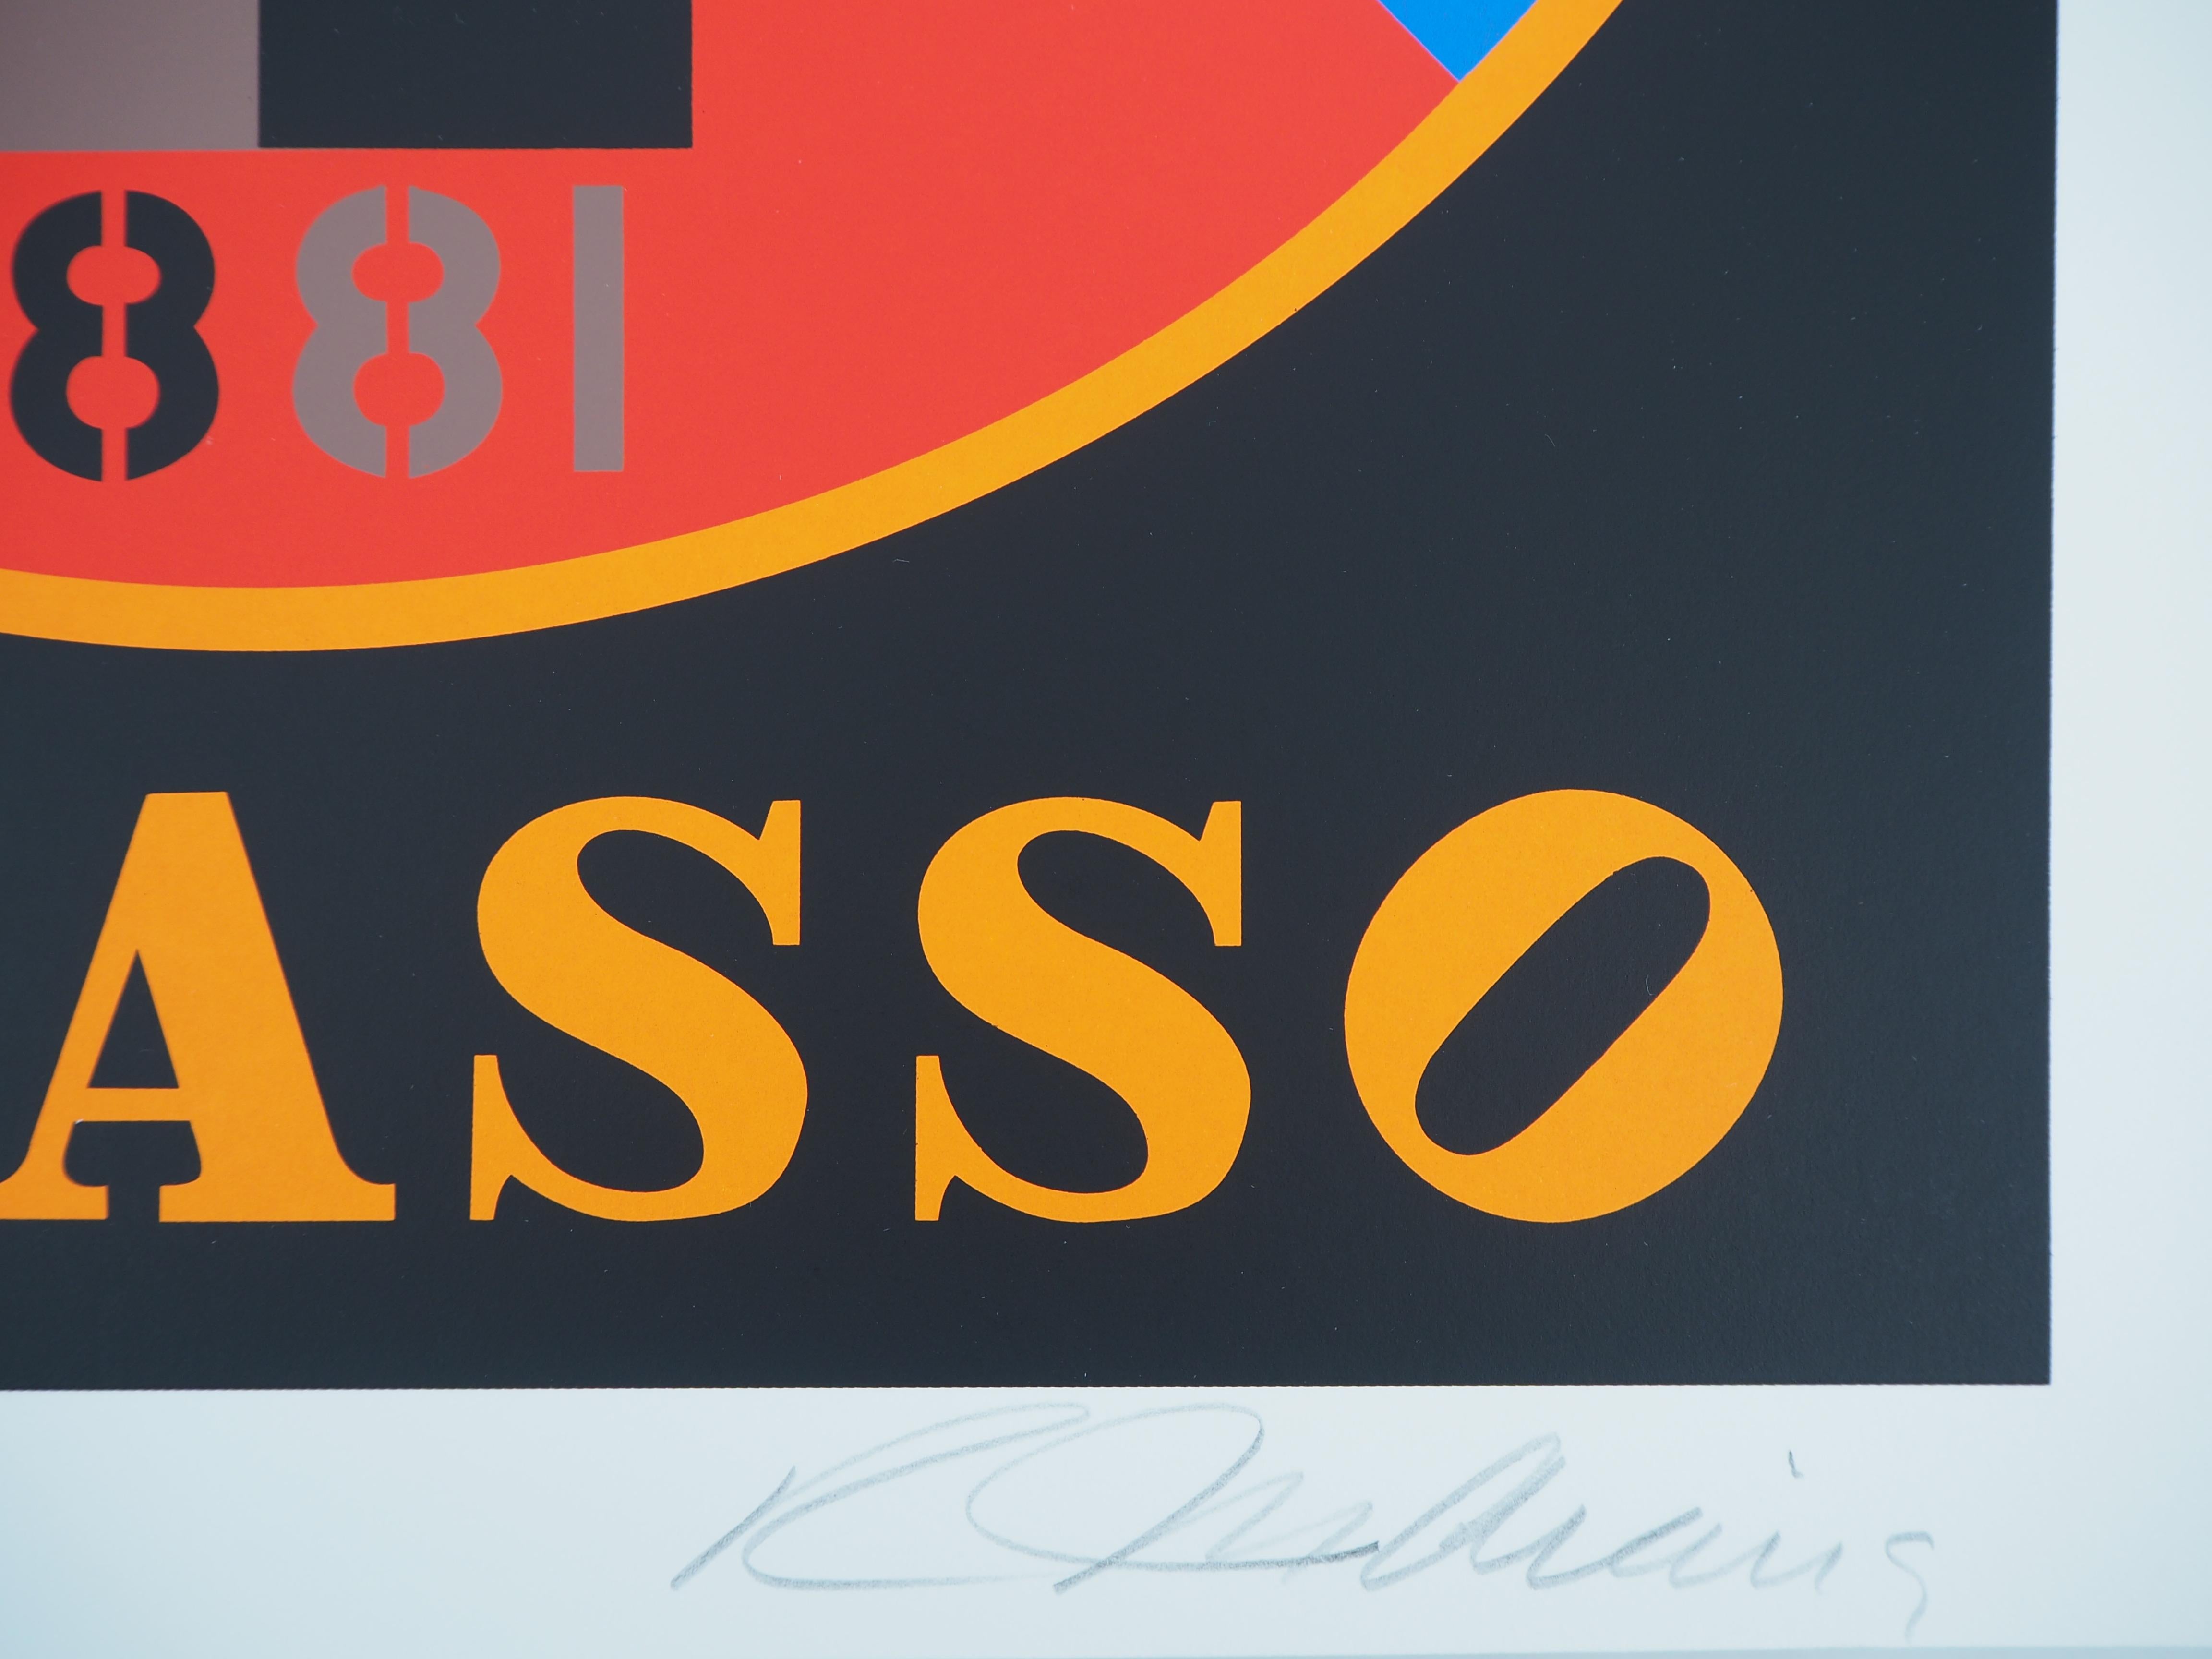 Picasso - Original screenprint, Handsigned - Certificate - Print by Robert Indiana